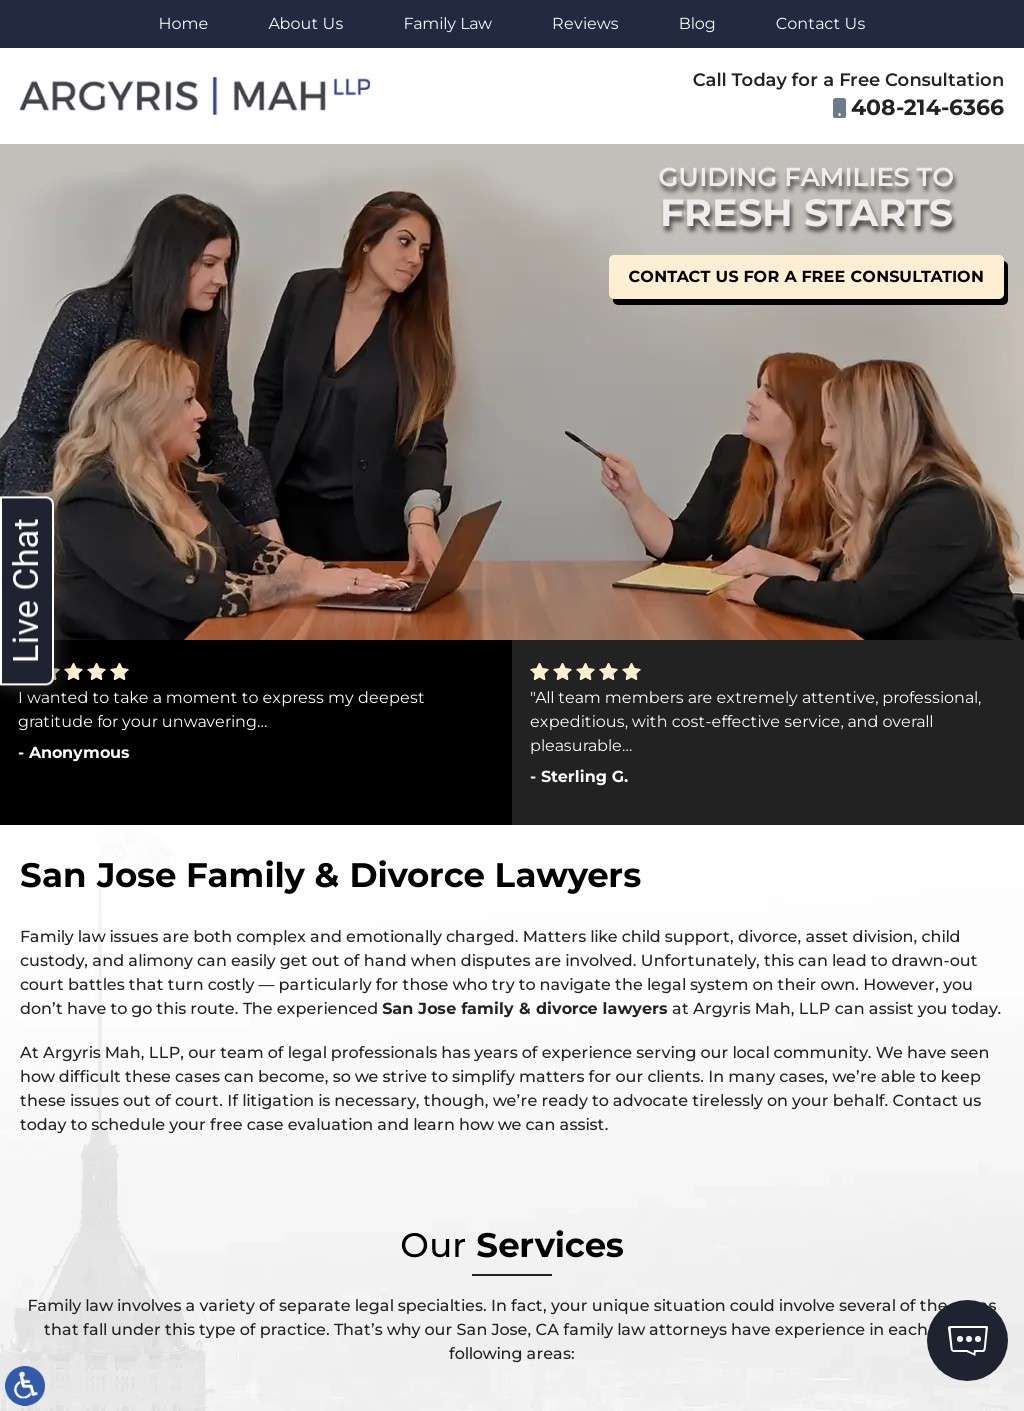 San Jose Family & Divorce Lawyers